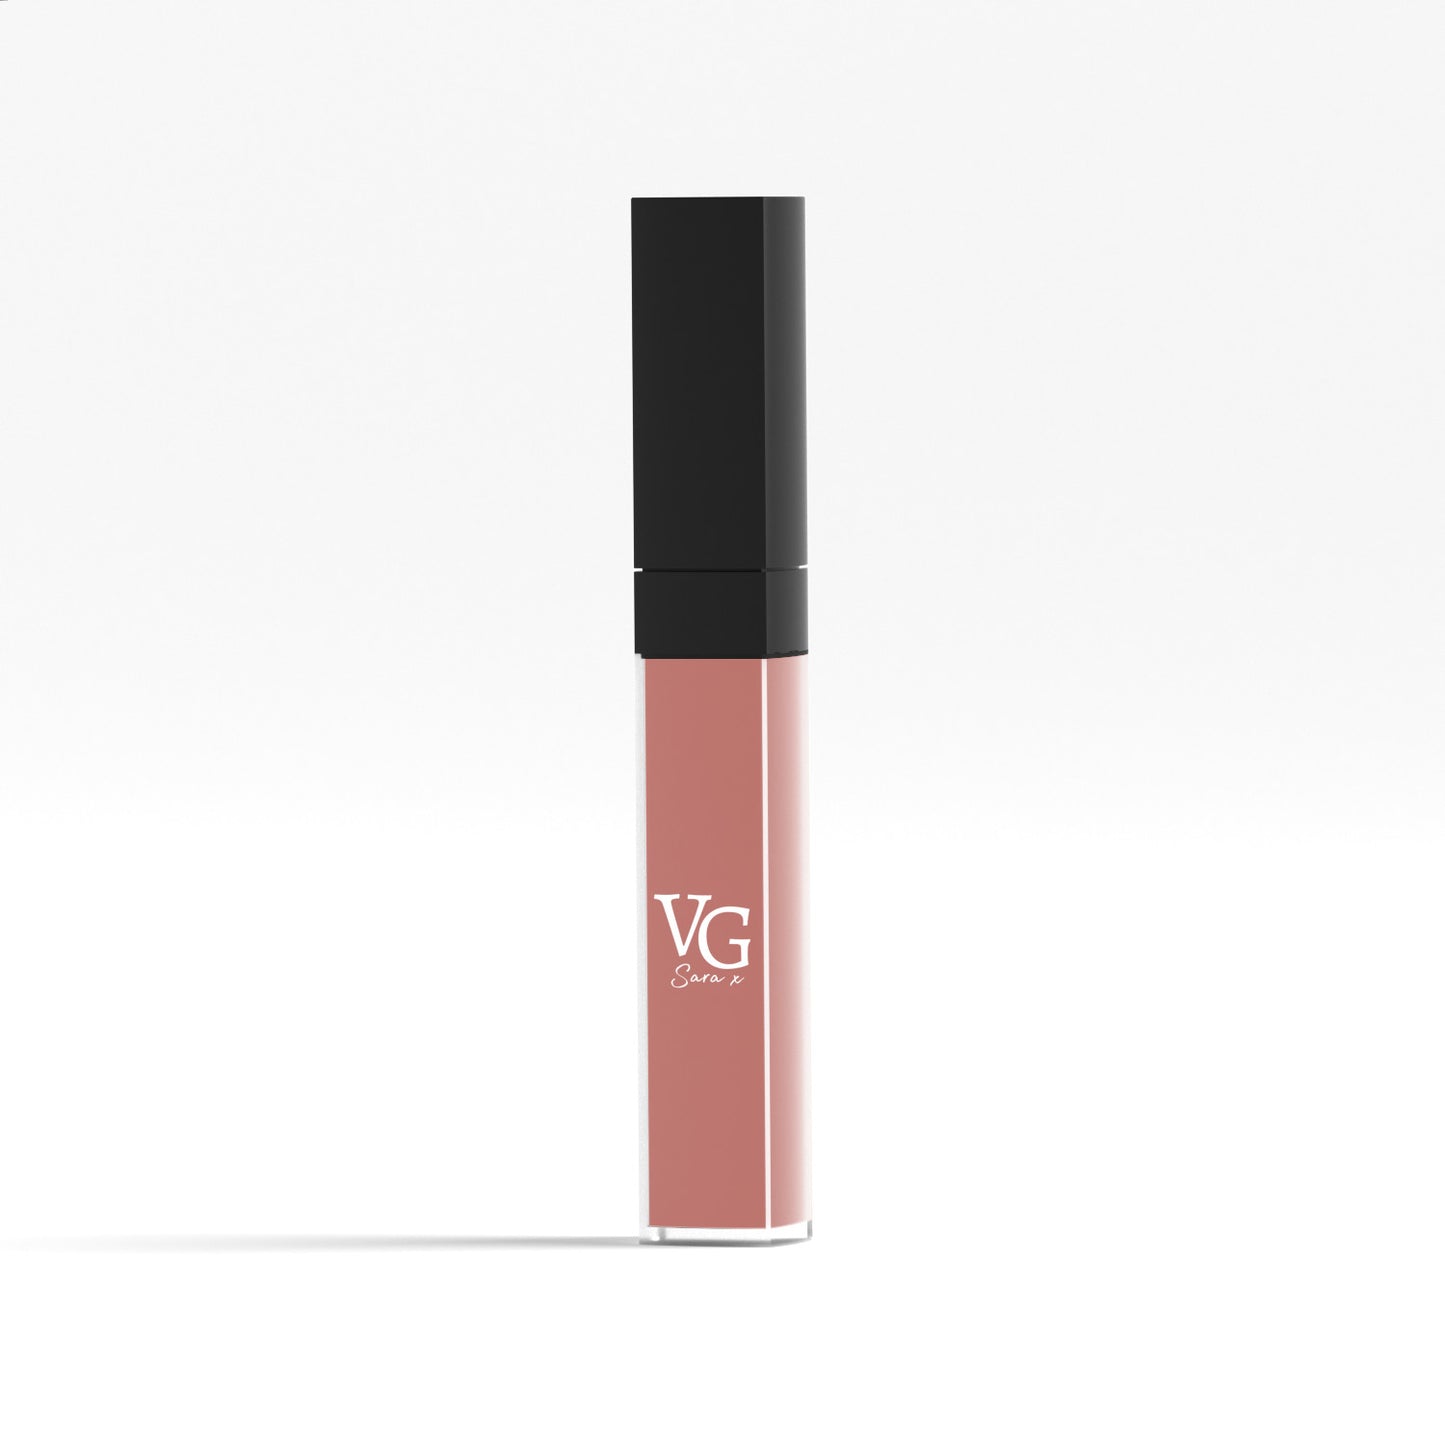 Pink VG liquid lipstick with a matte finish